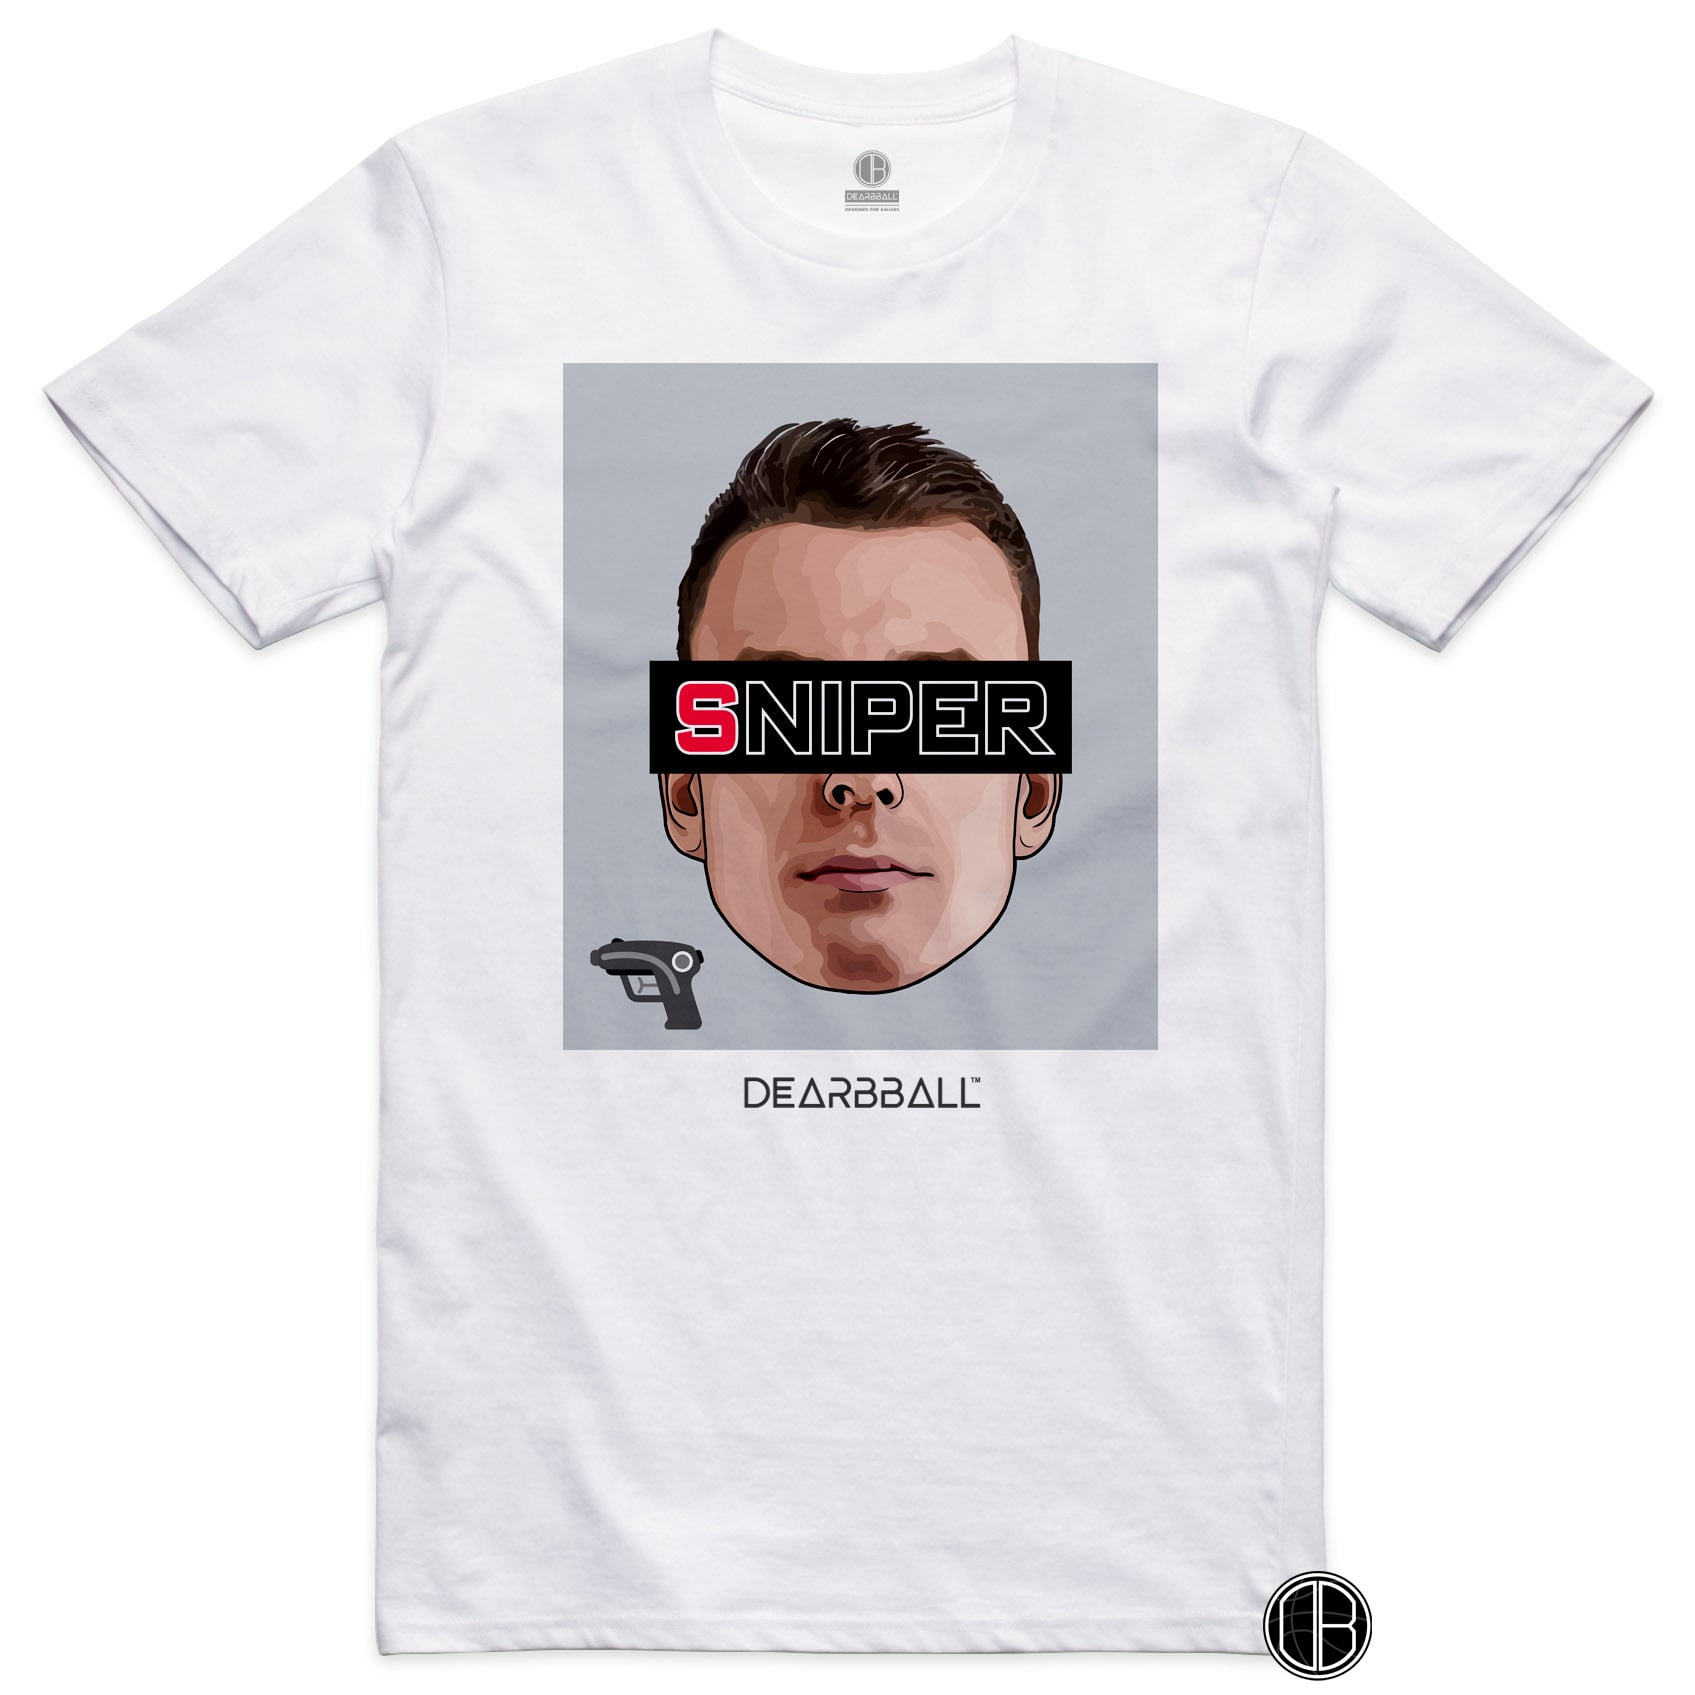 DearBBall T-Shirt - SNIPER Black Edition